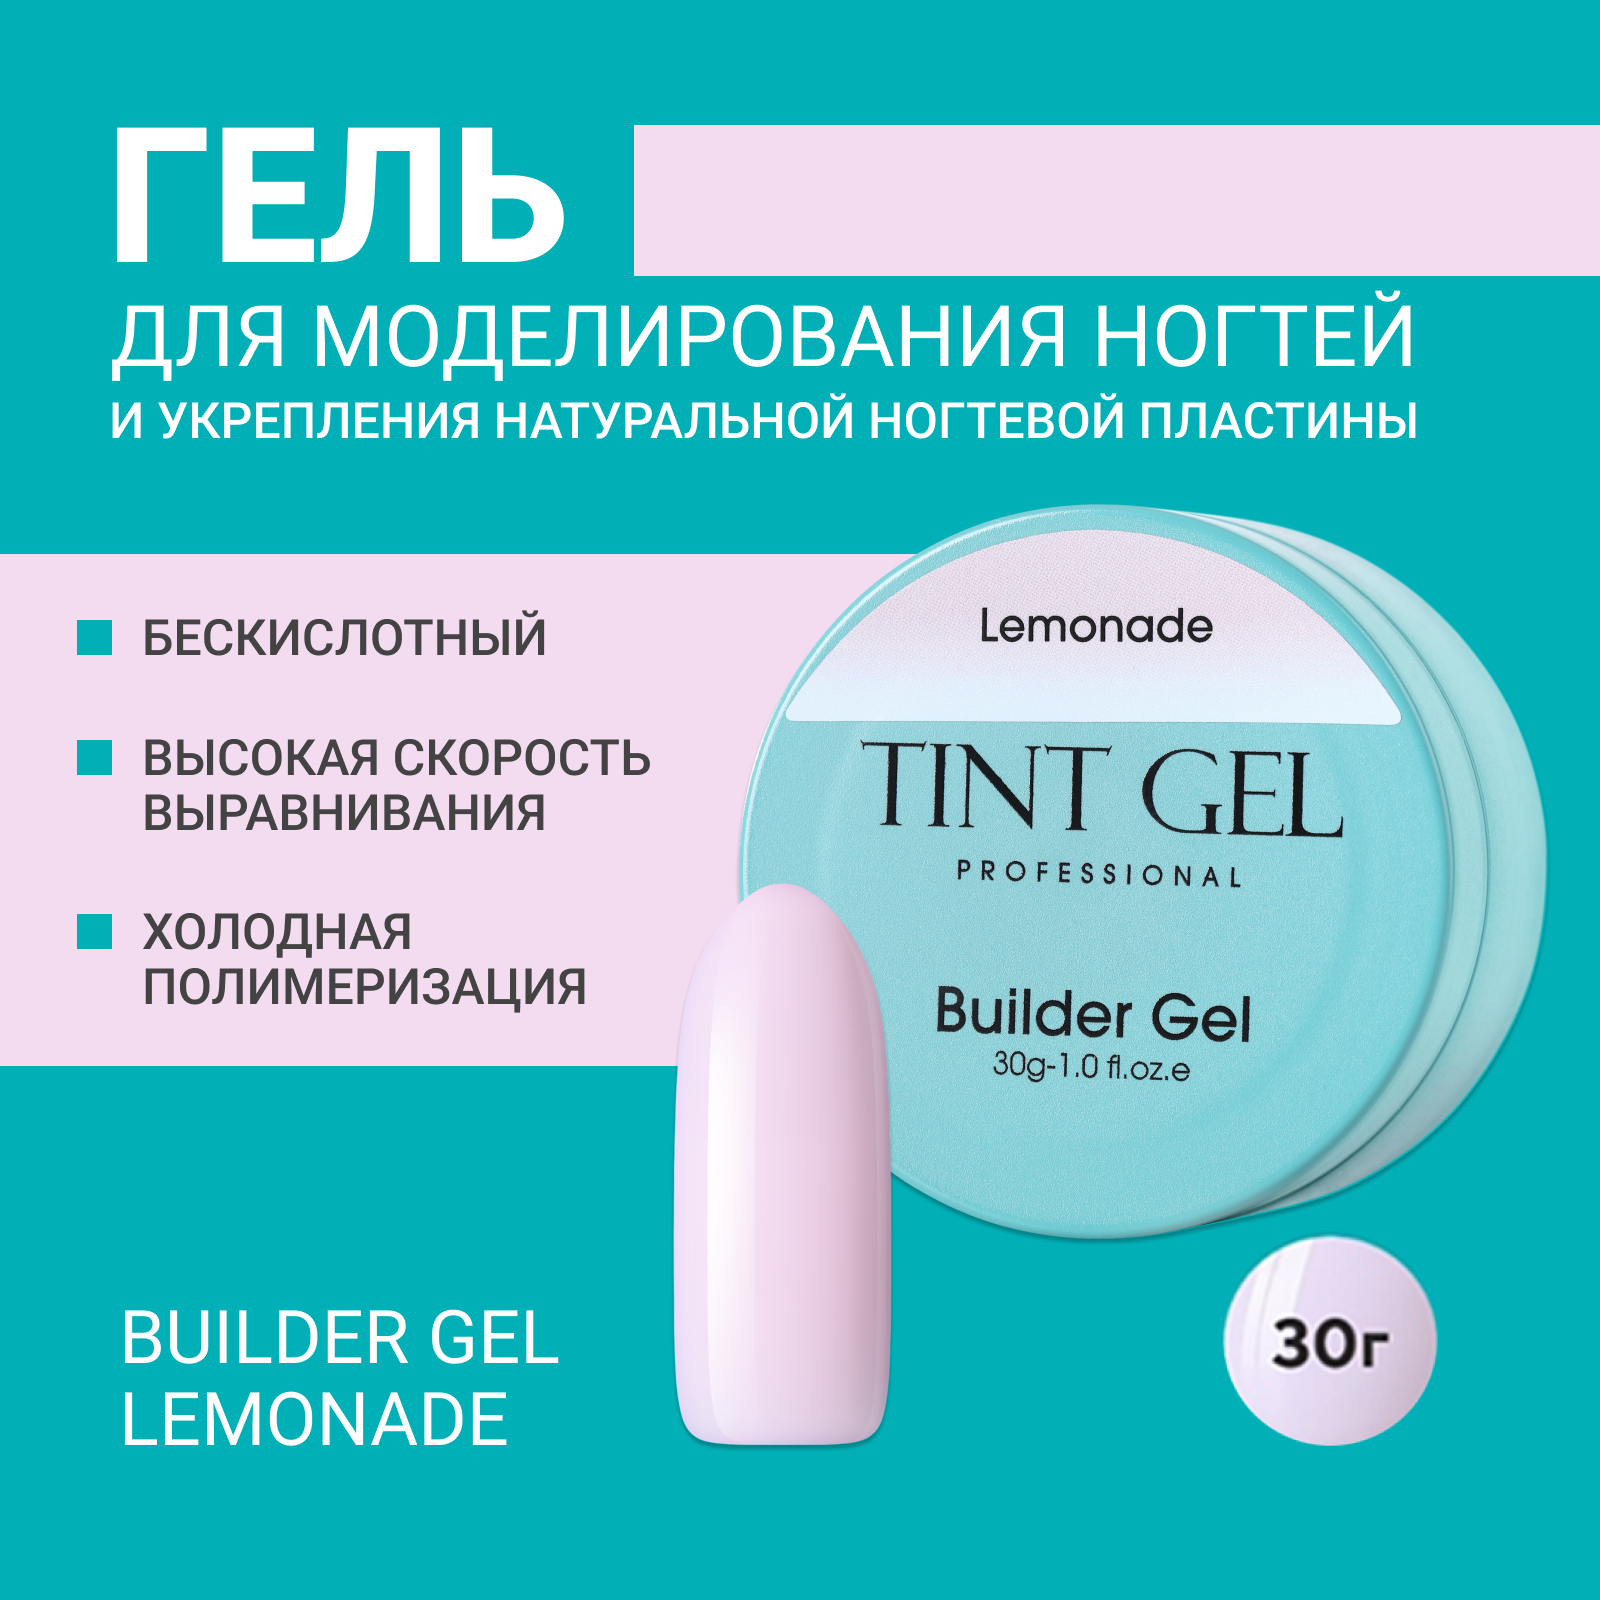 Гель Tint Gel Professional Builder gel Lemonade 30 г